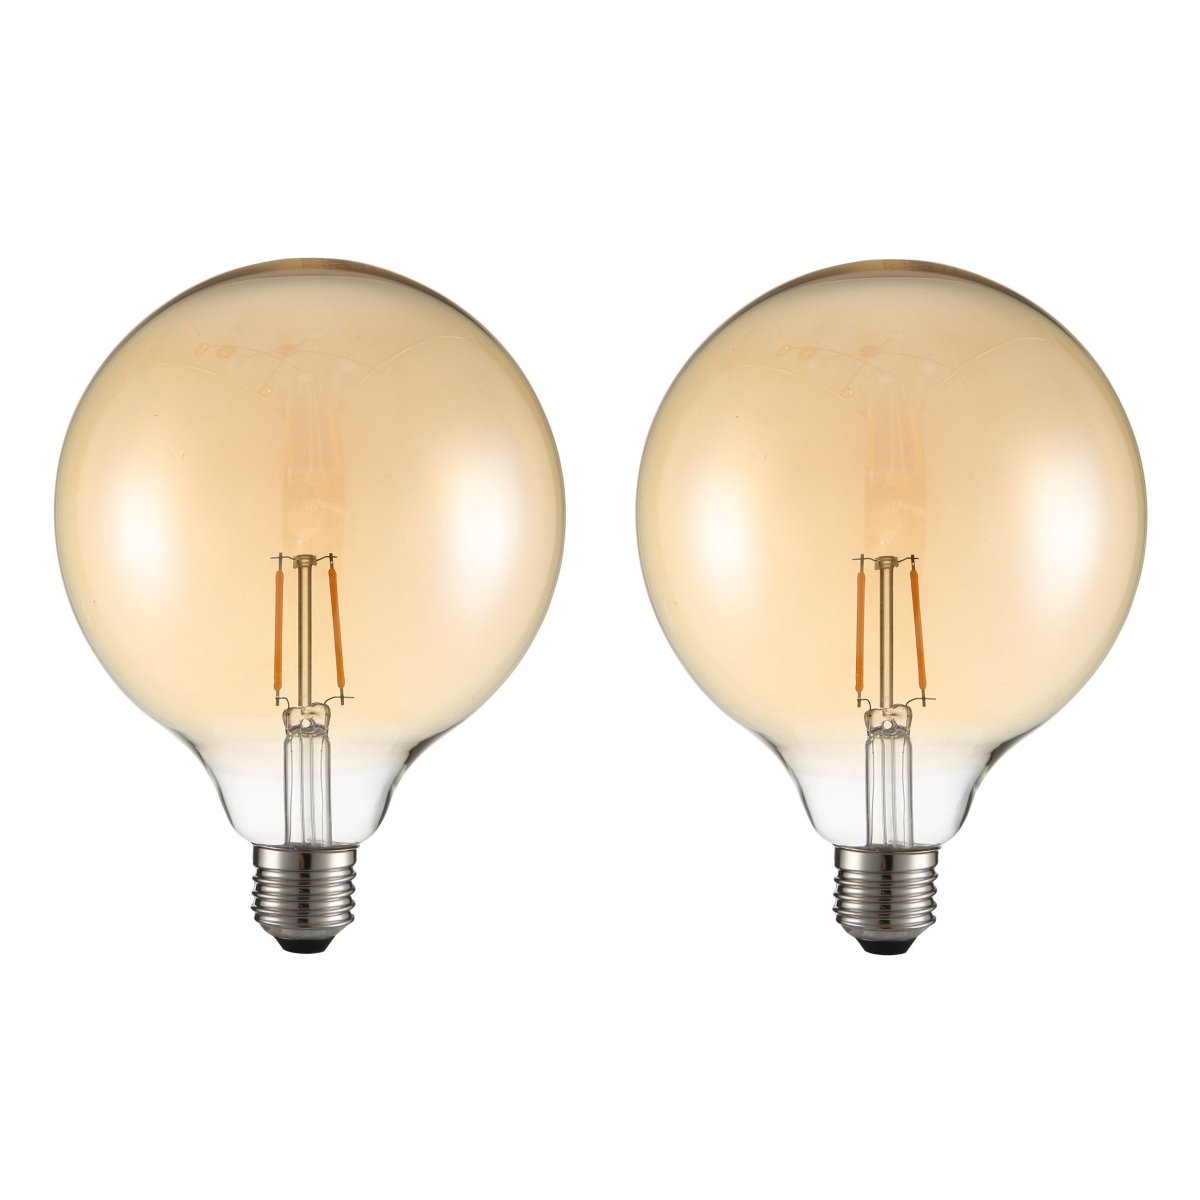 Main image of LED Filament Bulb G125 Globe E27 Edison Screw 2W 220lm Warm White 2400K Amber Pack of 2 | TEKLED 583-150461